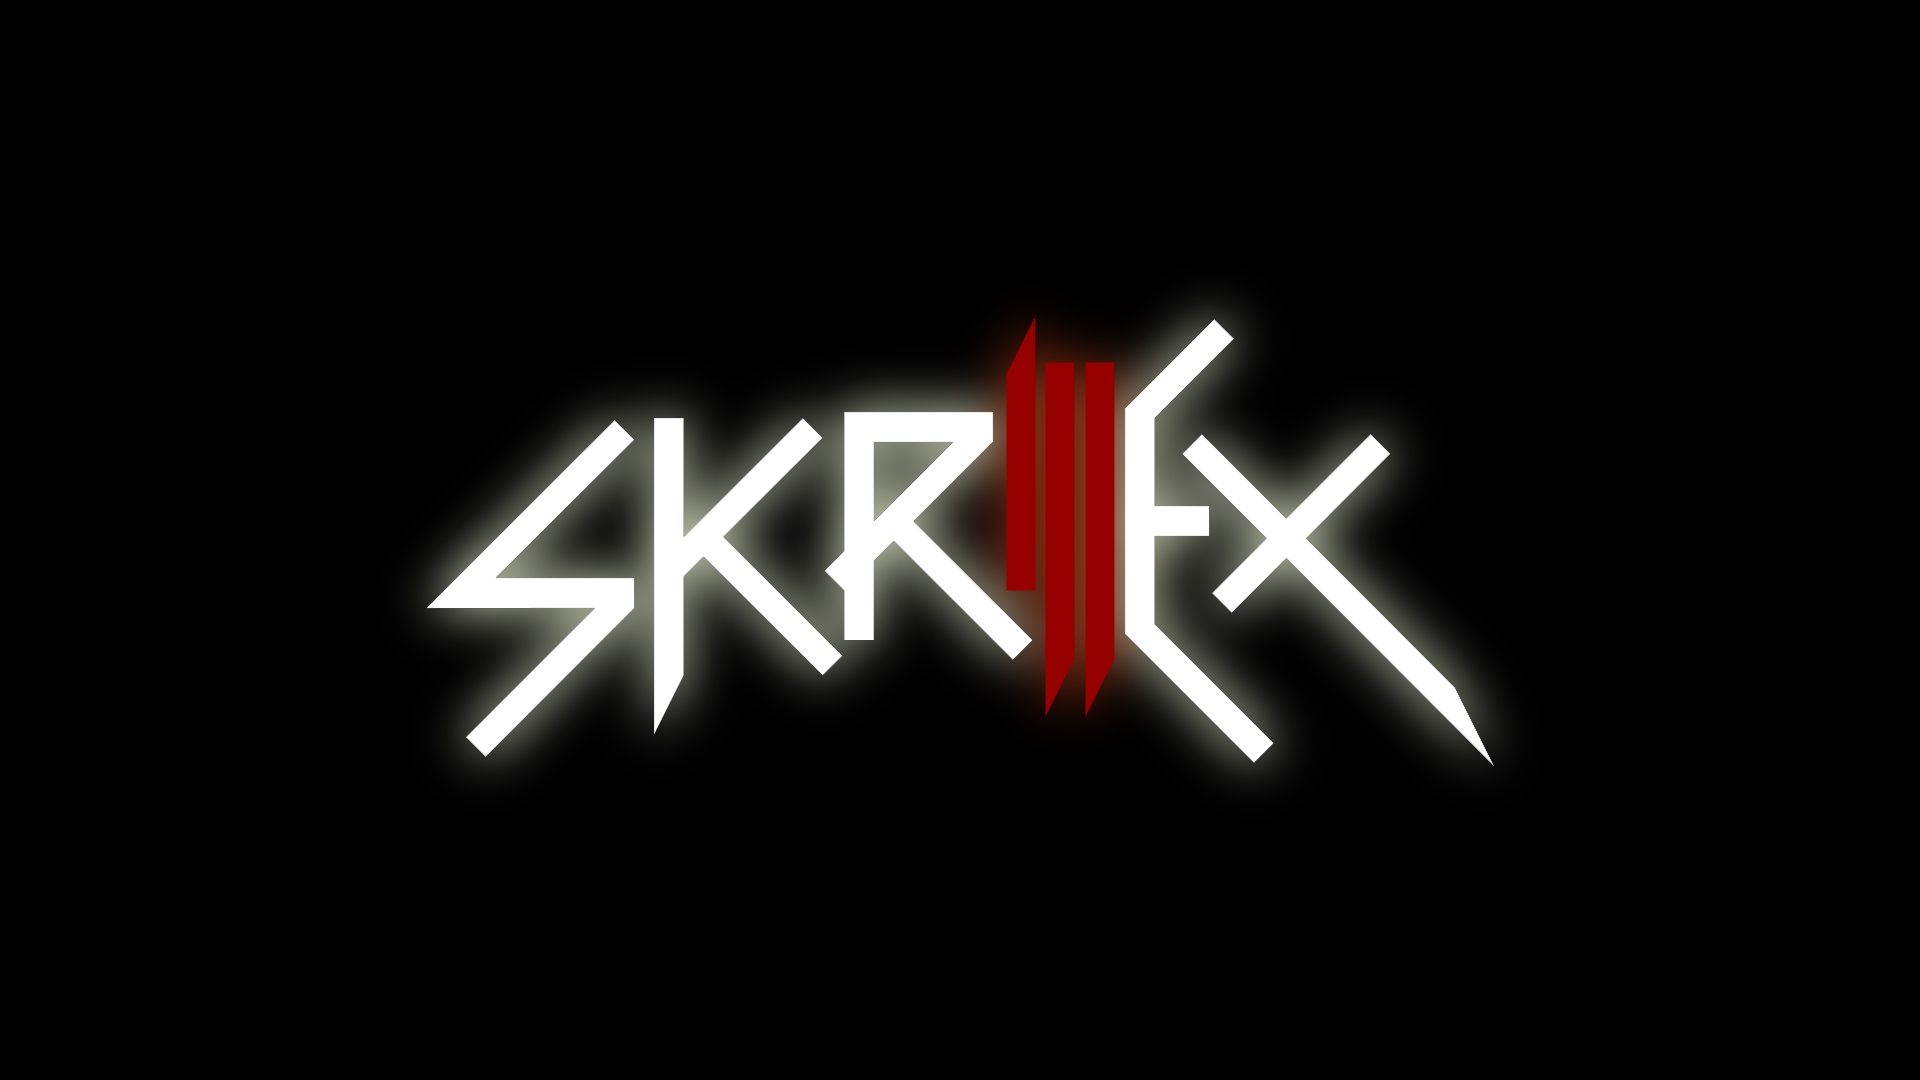 Skrillex Wallpaper Download